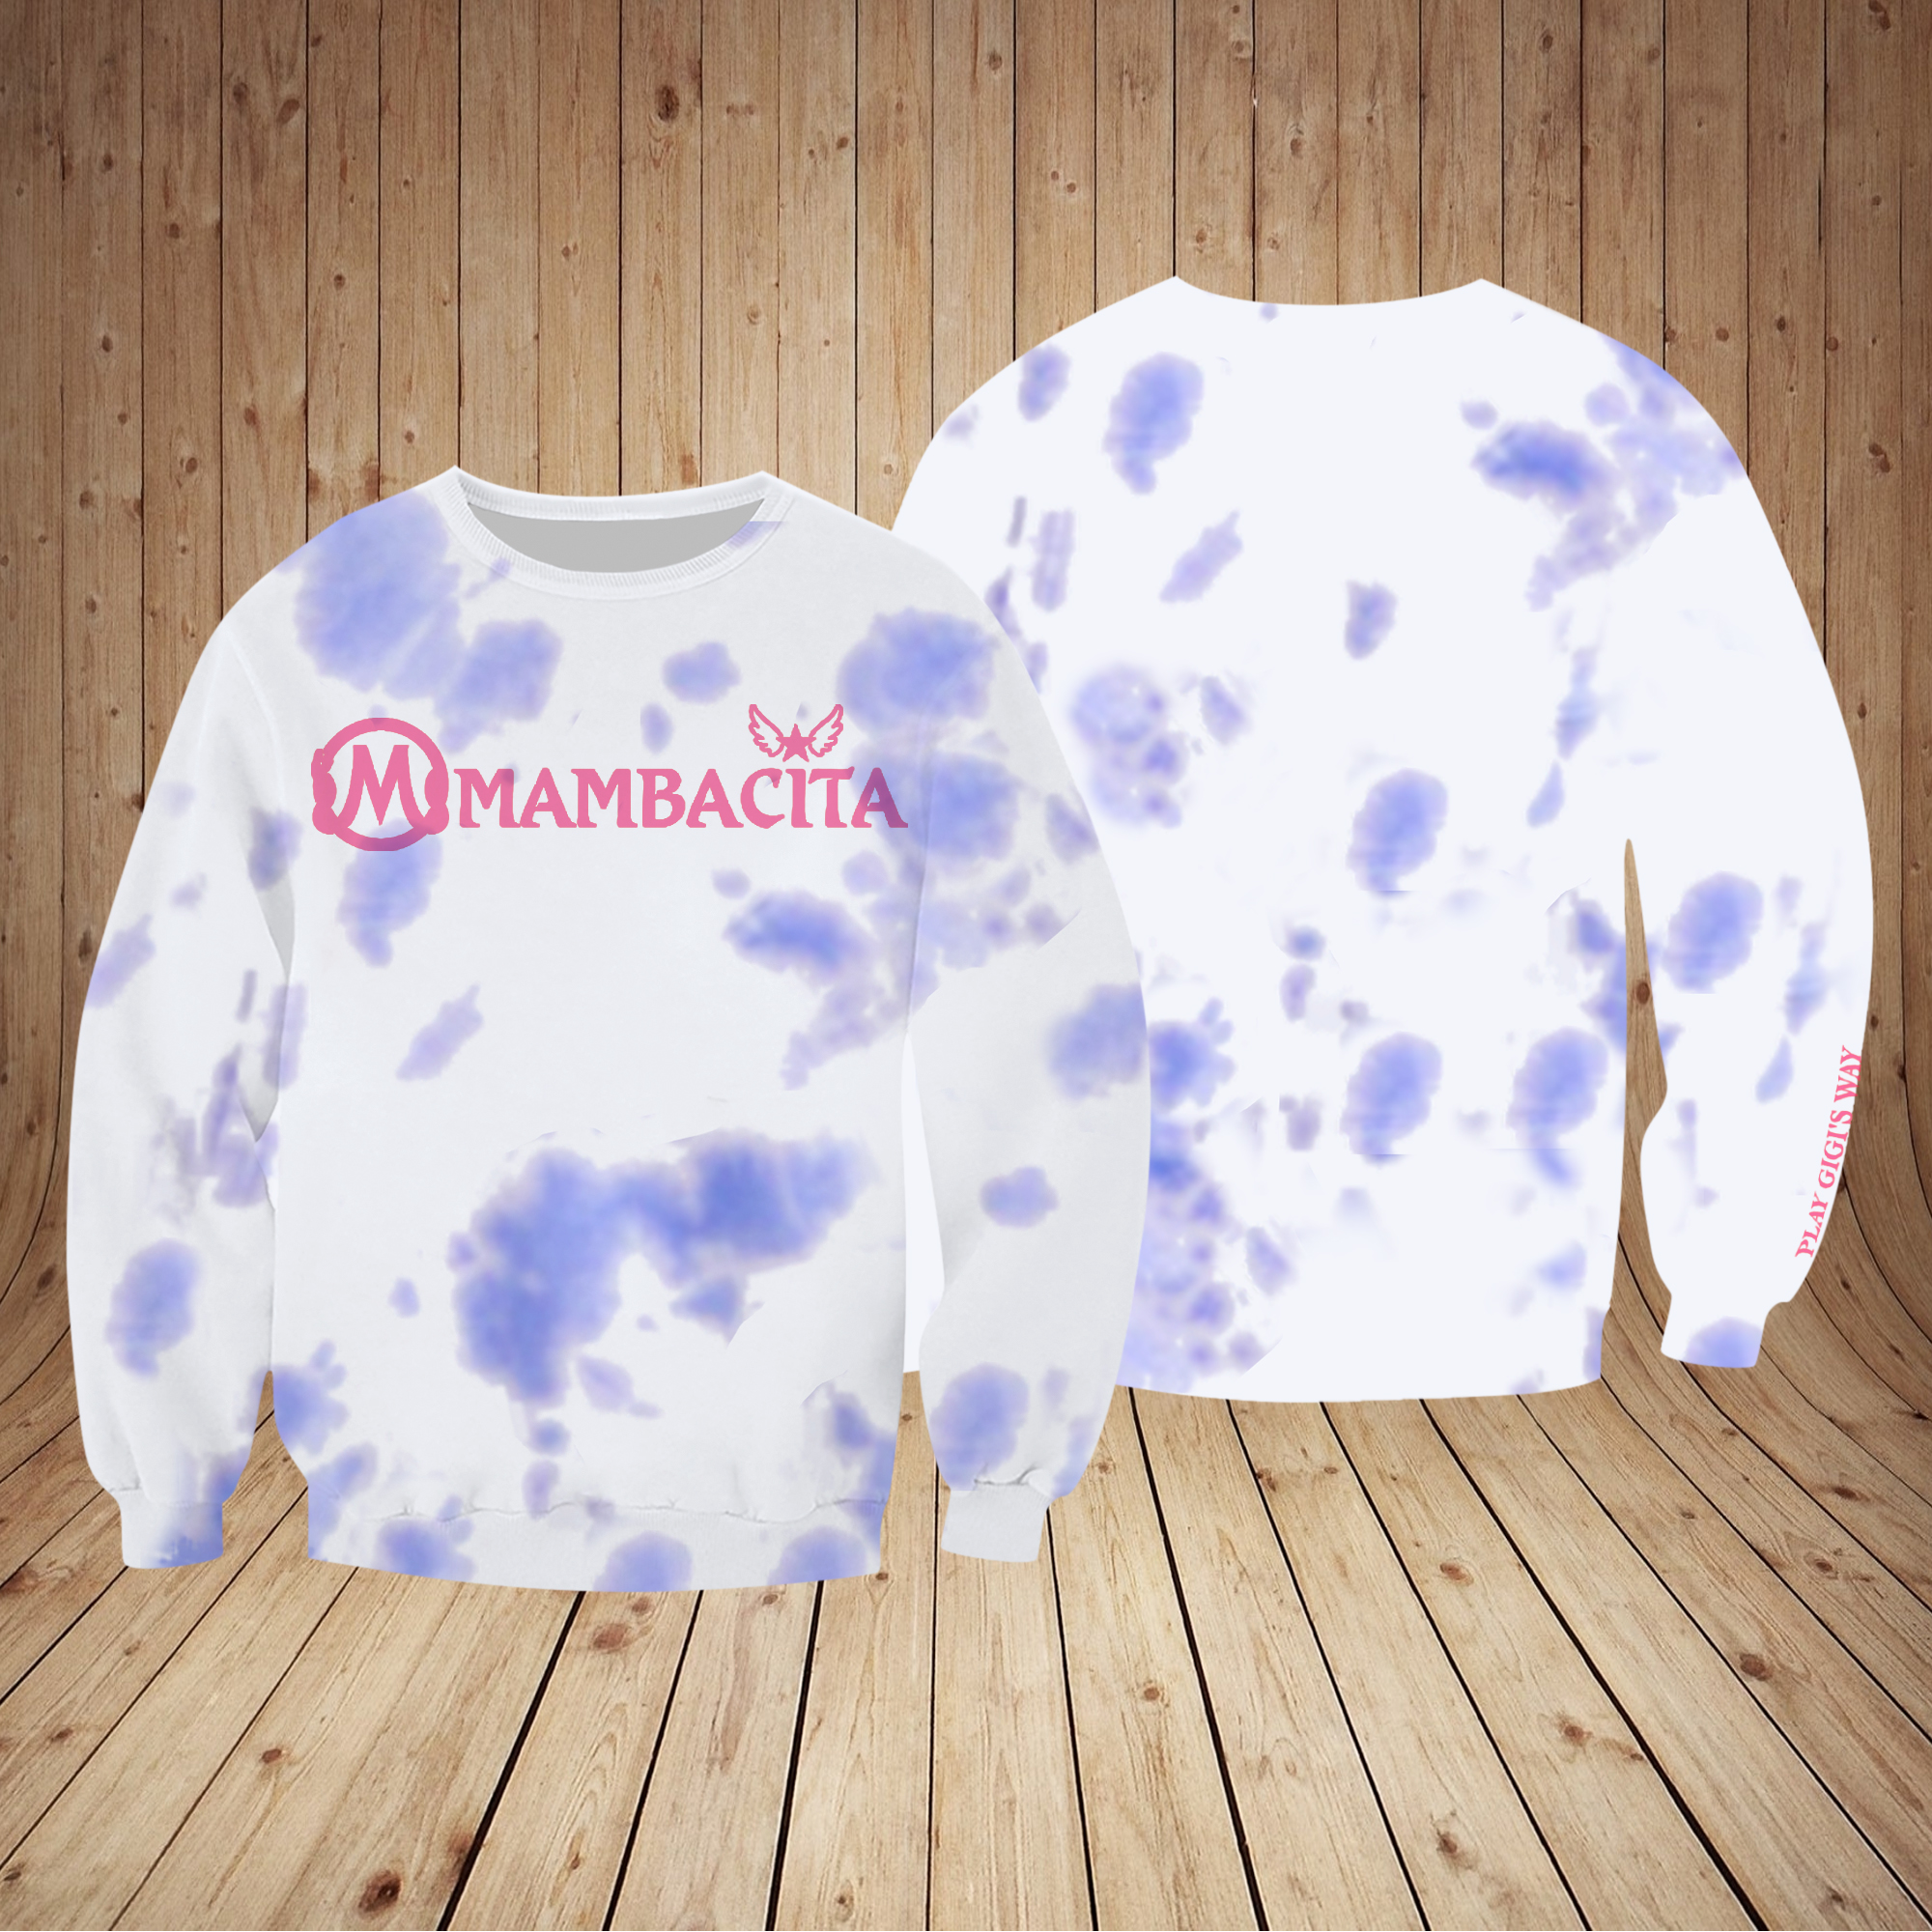 Mambacita all over printed sweatshirt